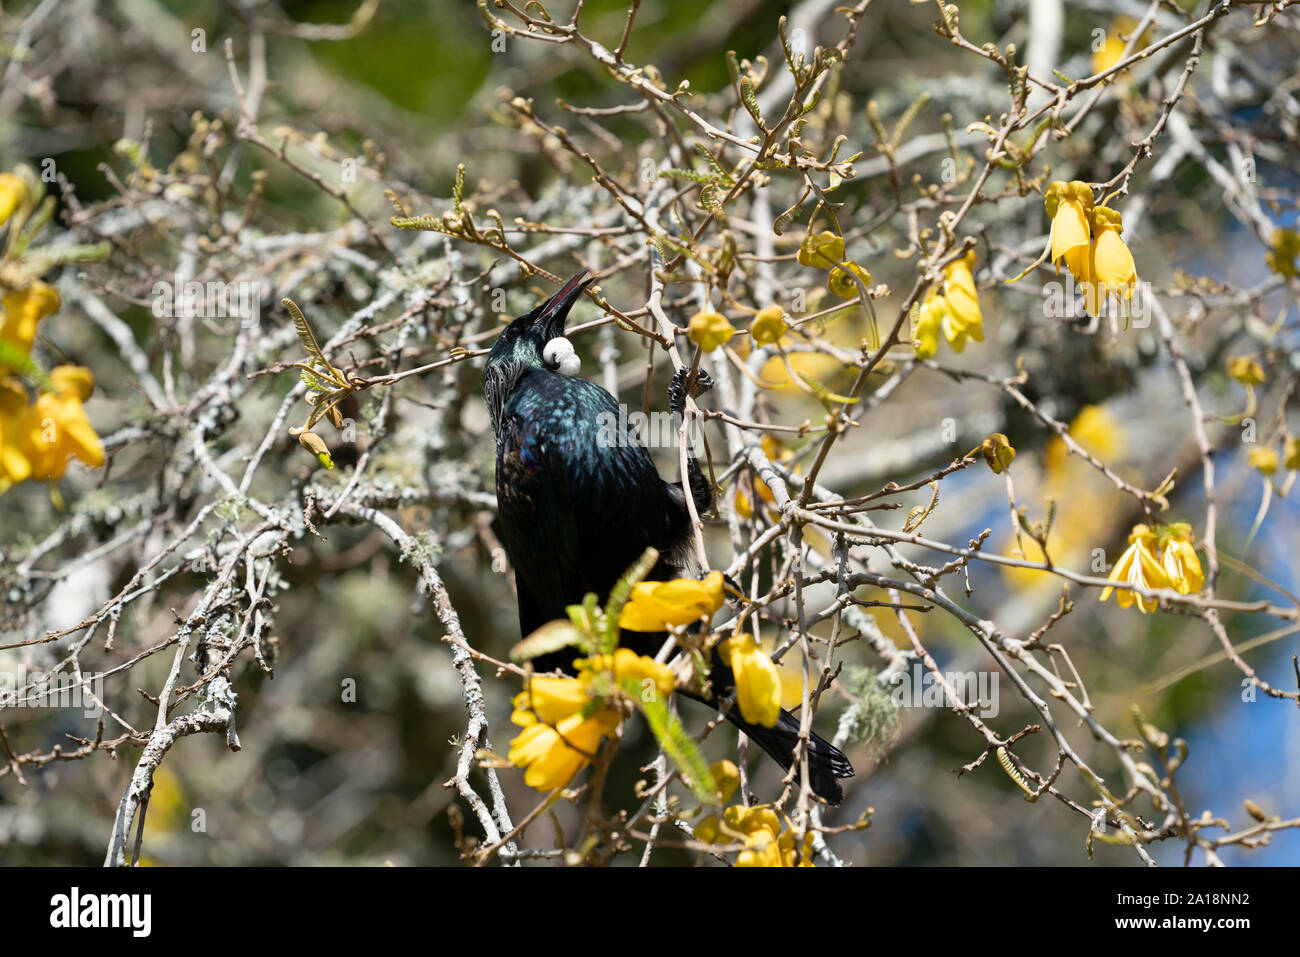 New Zealand native bird, the tui feeding on nectar in yellow flowered kowhai tree. Stock Photo